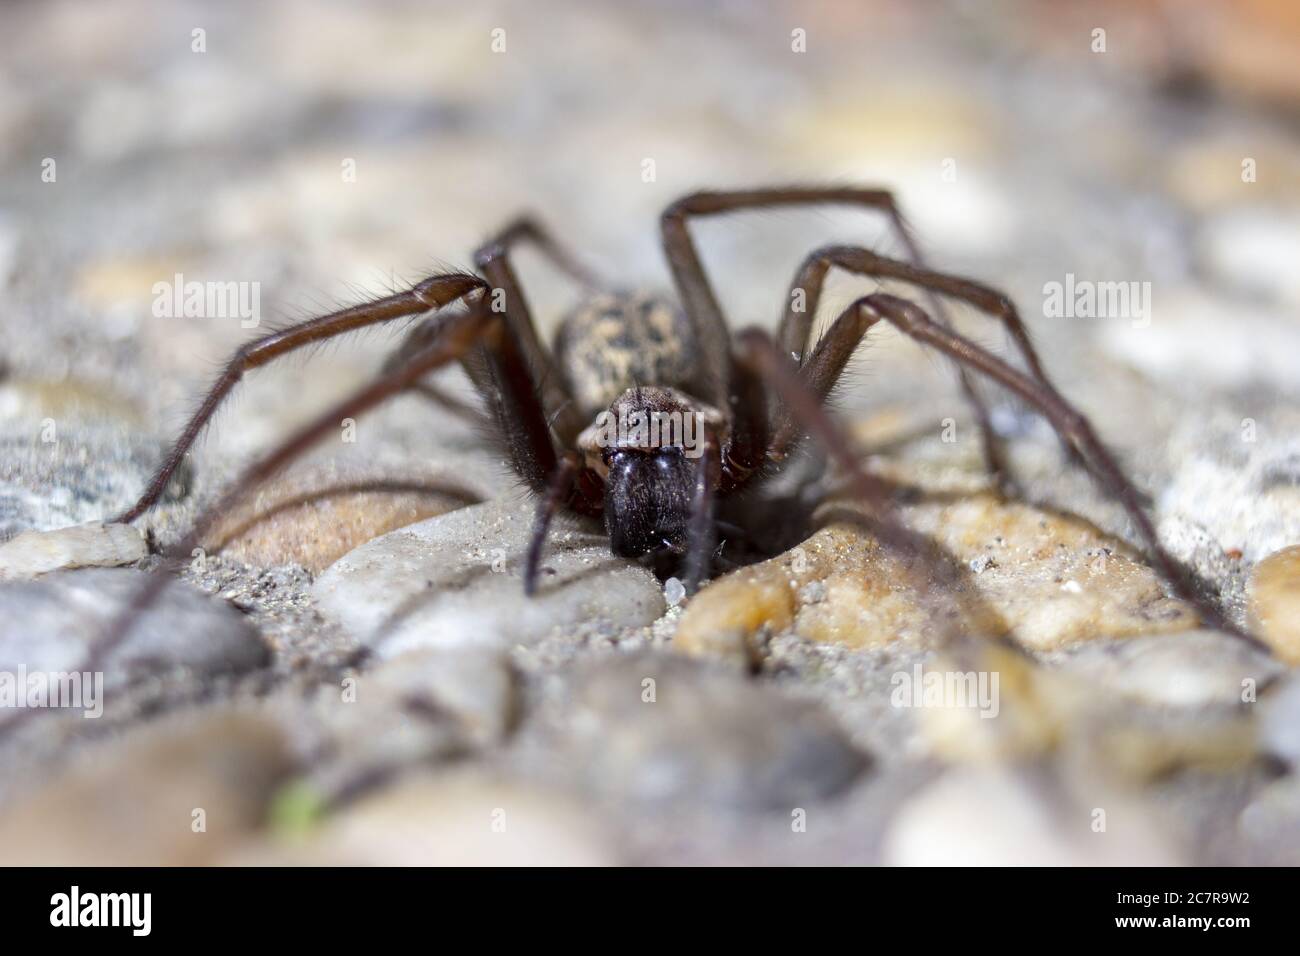 Detail of giant house spider eratigena artica on stones Stock Photo